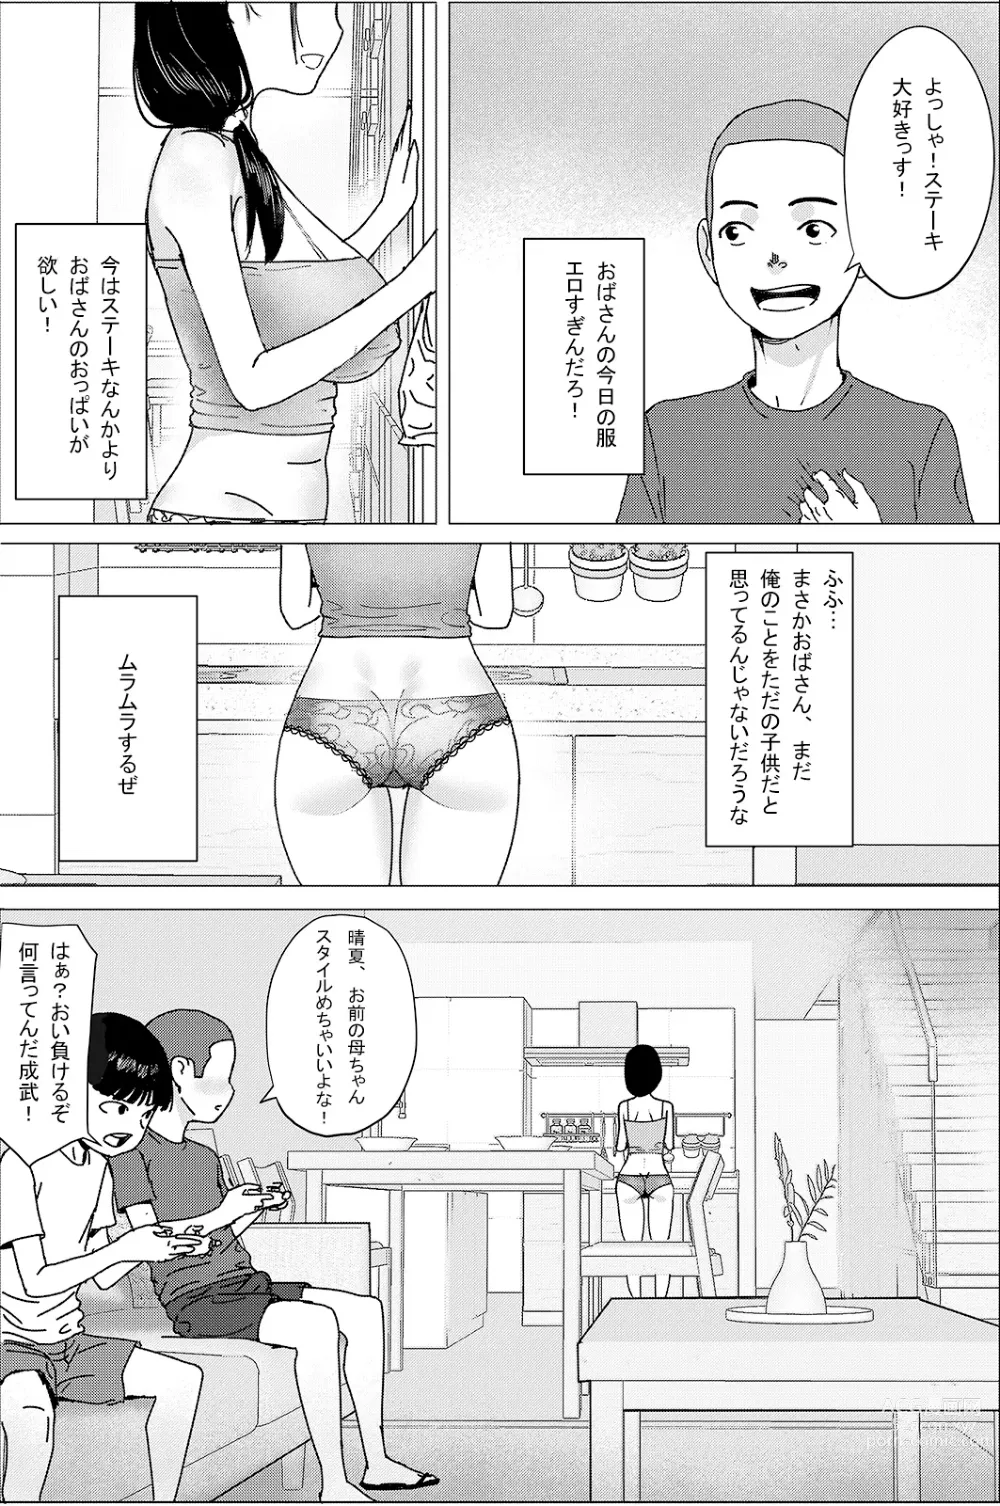 Page 5 of doujinshi Warugaki Series